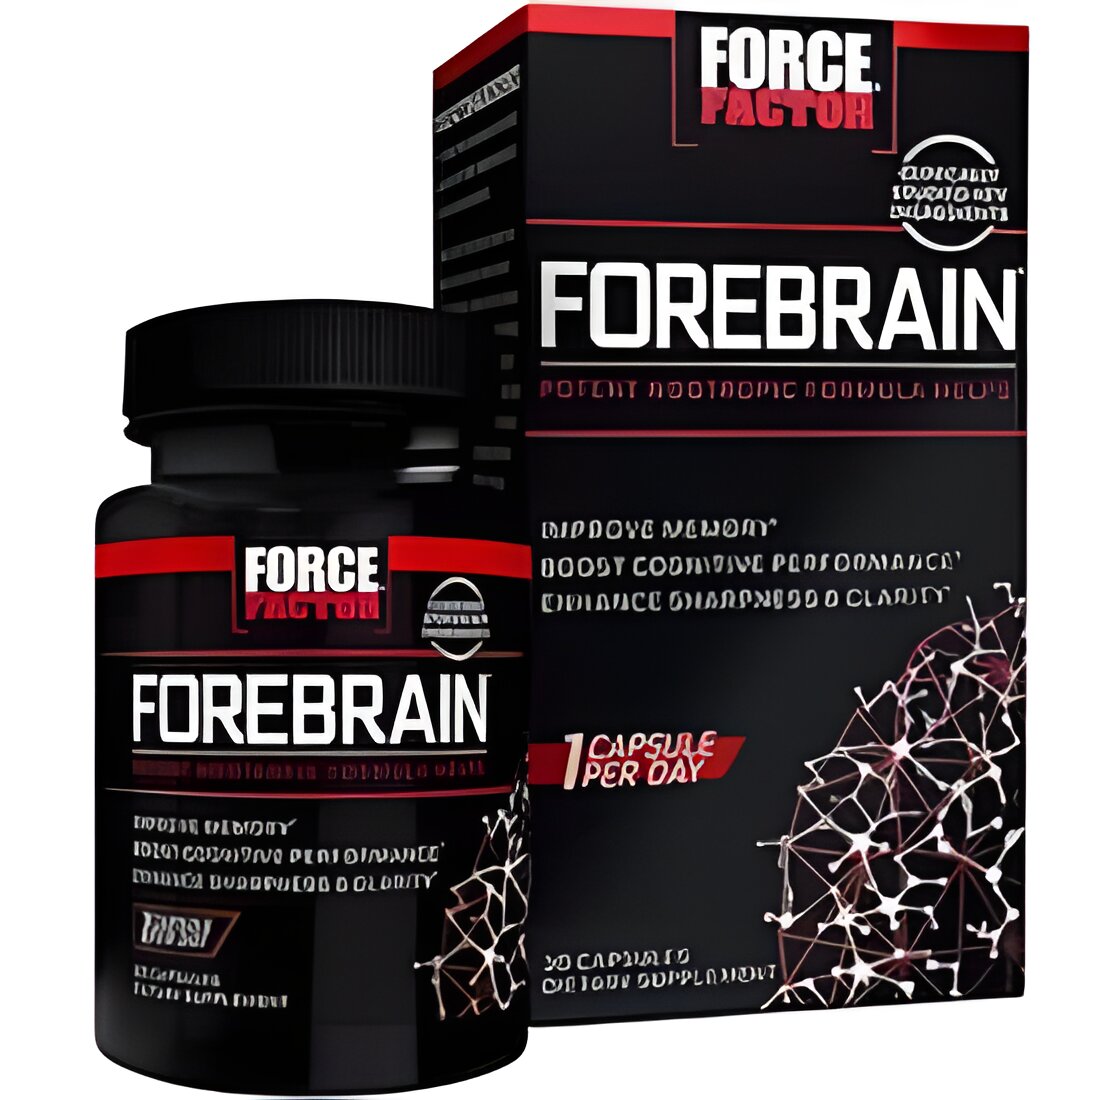 Free Force Factor ForeBrain Sample